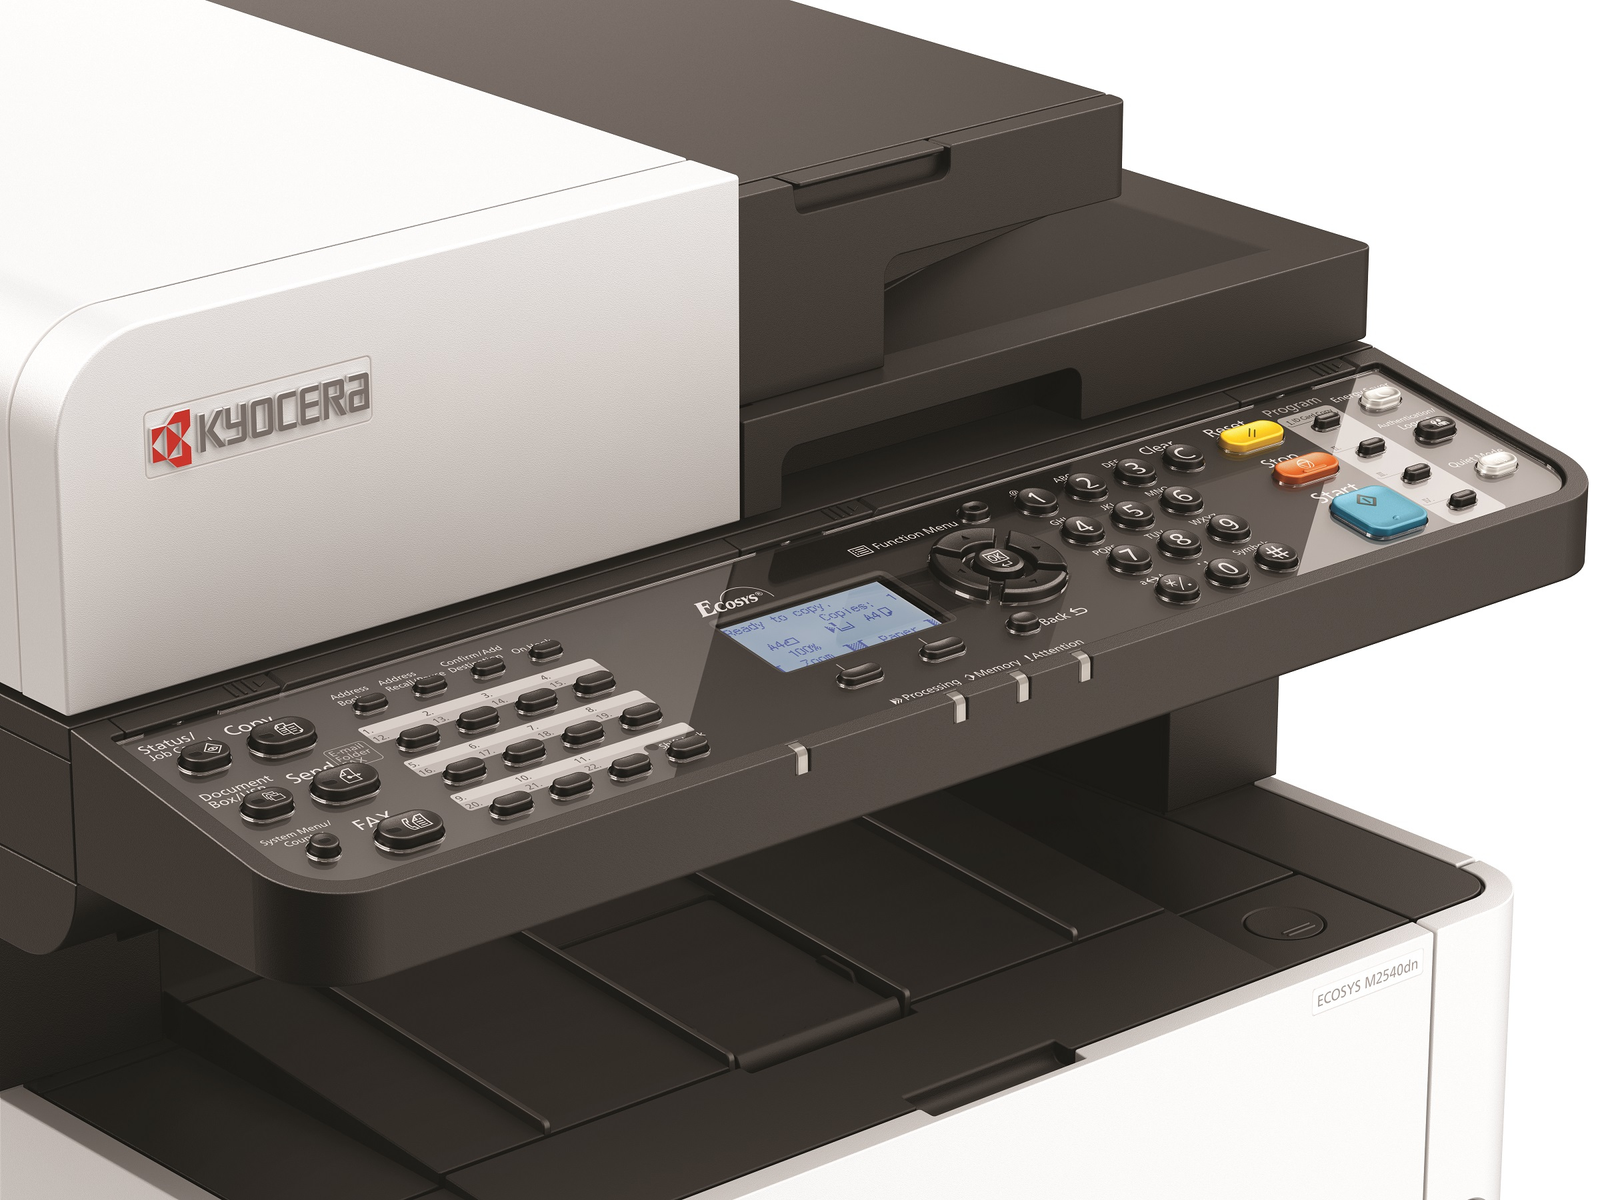 KYOCERA Klimaschutz-System ECOSYS M2540dn Laser Kopierer, Multifunktionsgeräte Drucker, Netzwerkfähig s/w und 4in1, printer_multifunction Laser-Multifunktionsgerät (A4, Drucker